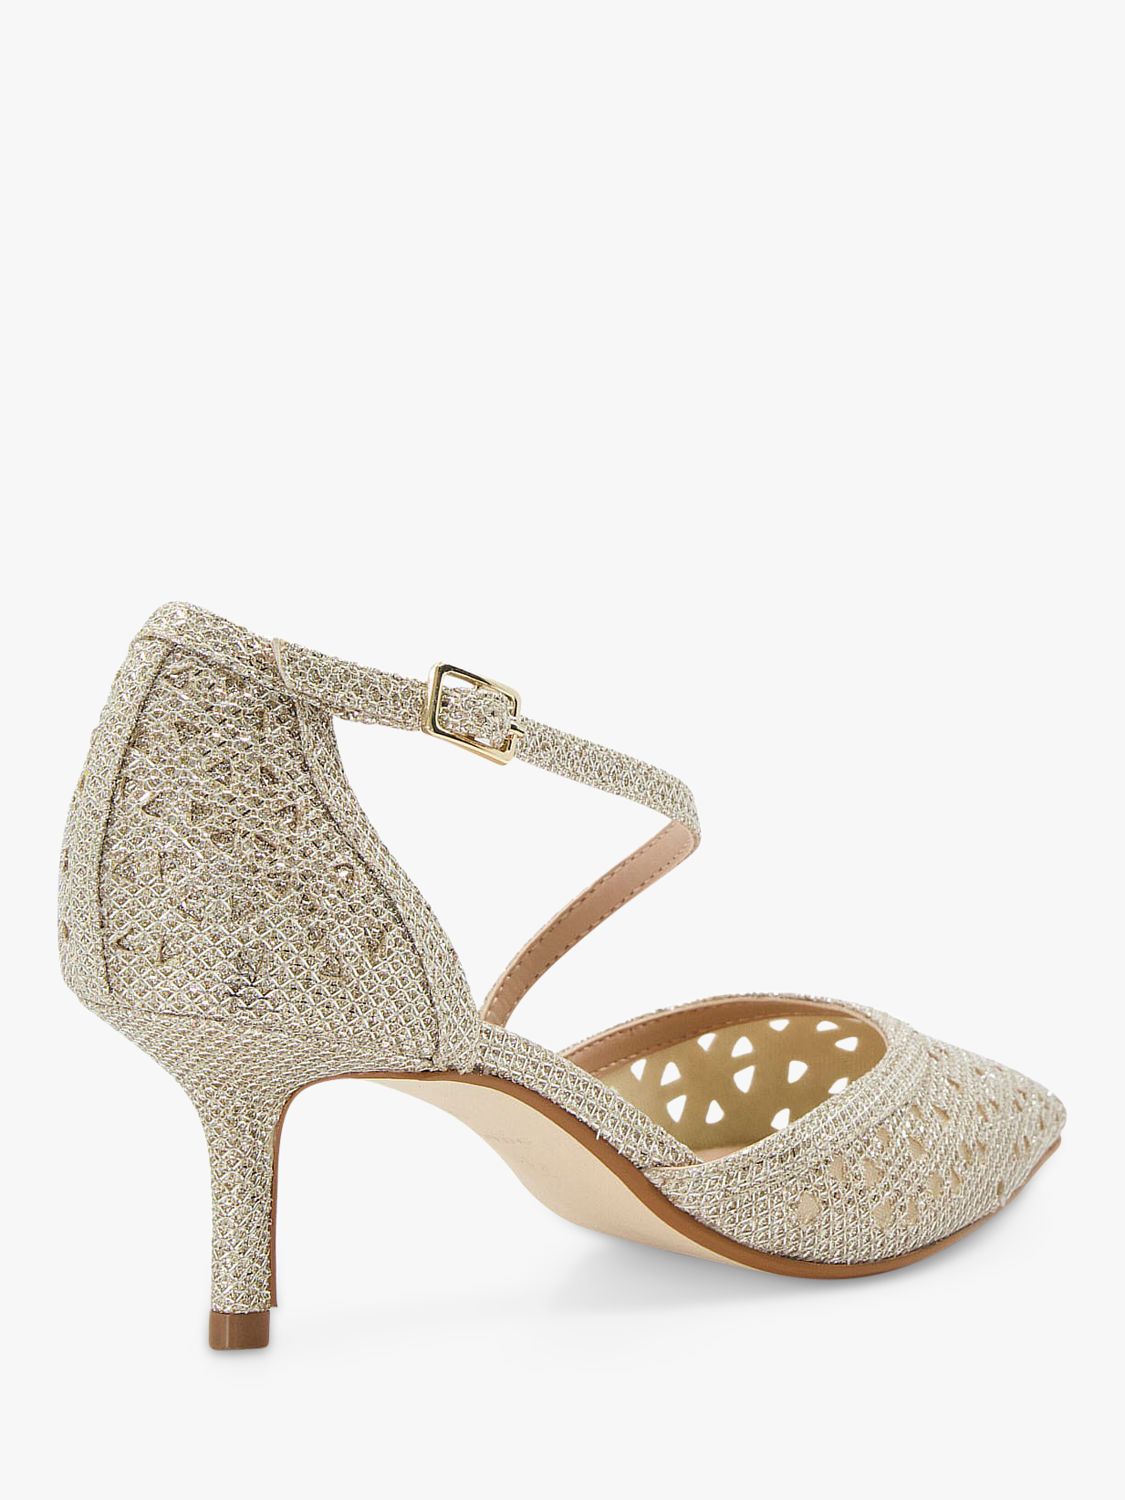 Dune Danna Kitten Heel Court Shoes, Gold at John Lewis & Partners